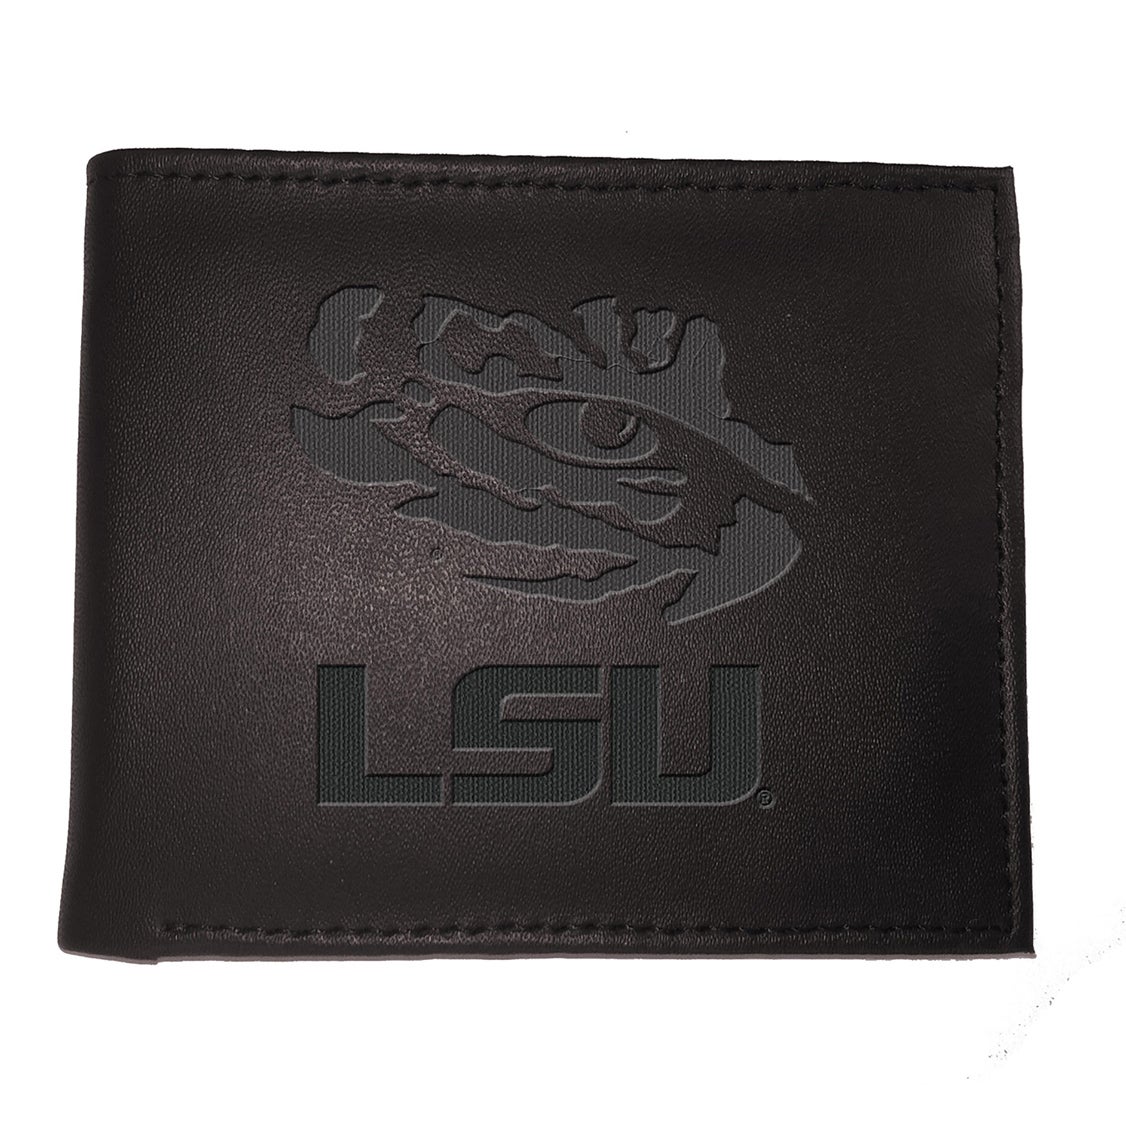 Louisiana State University Bi-Fold Leather Wallet